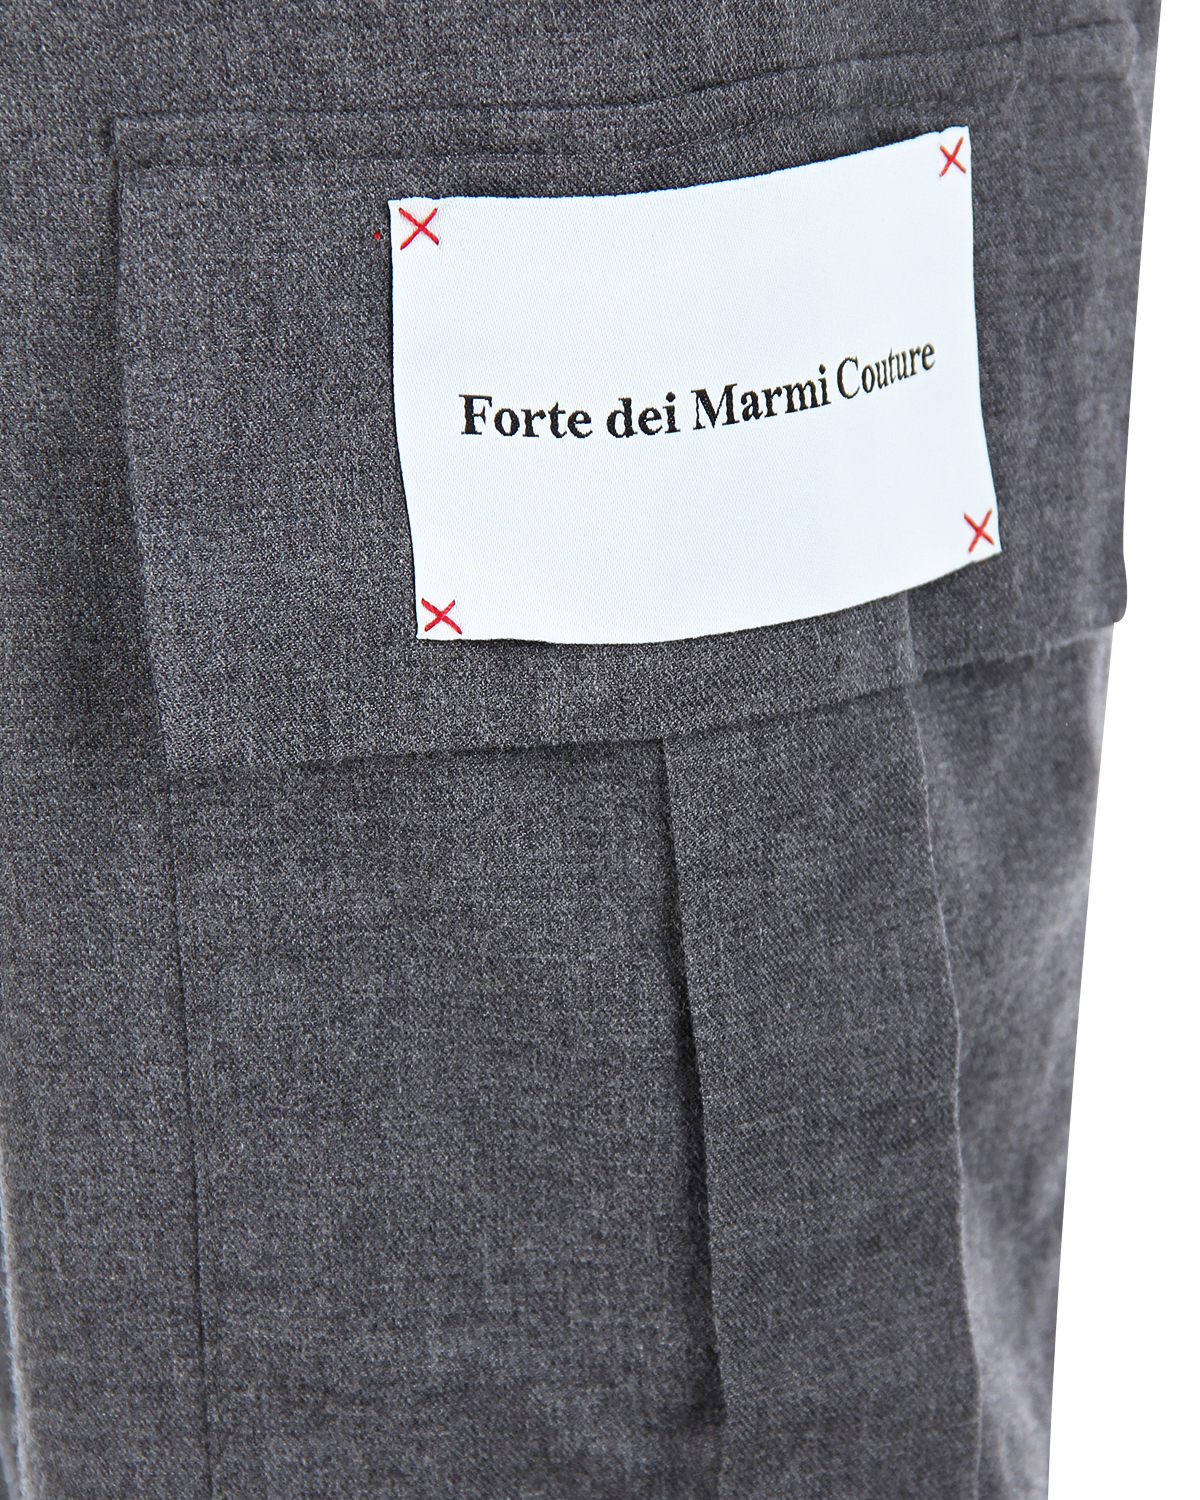 Серые брюки с карманом карго Forte dei Marmi Couture, размер 44, цвет серый - фото 10